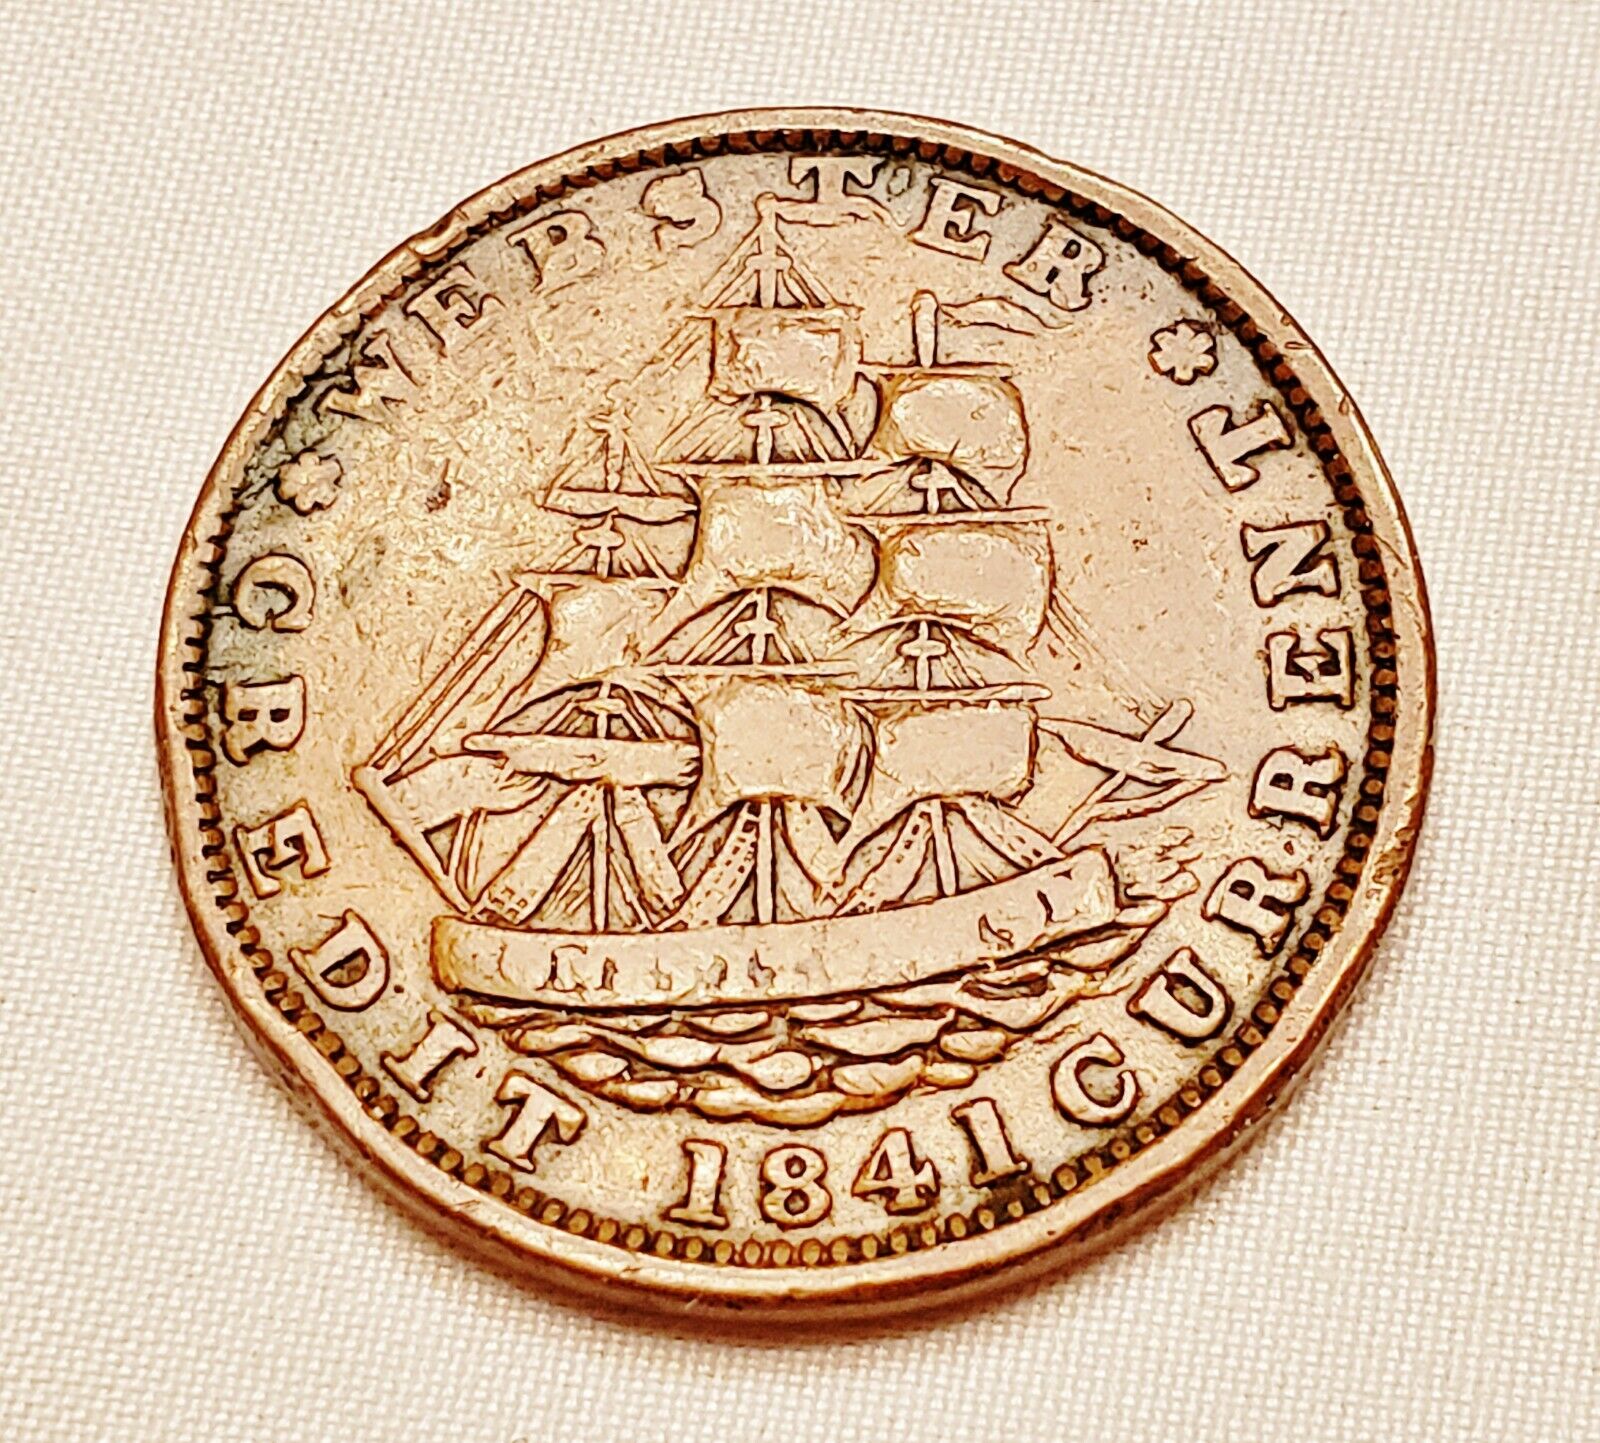 1841 Webster Credit Current Hard Times Token - Nice Coin